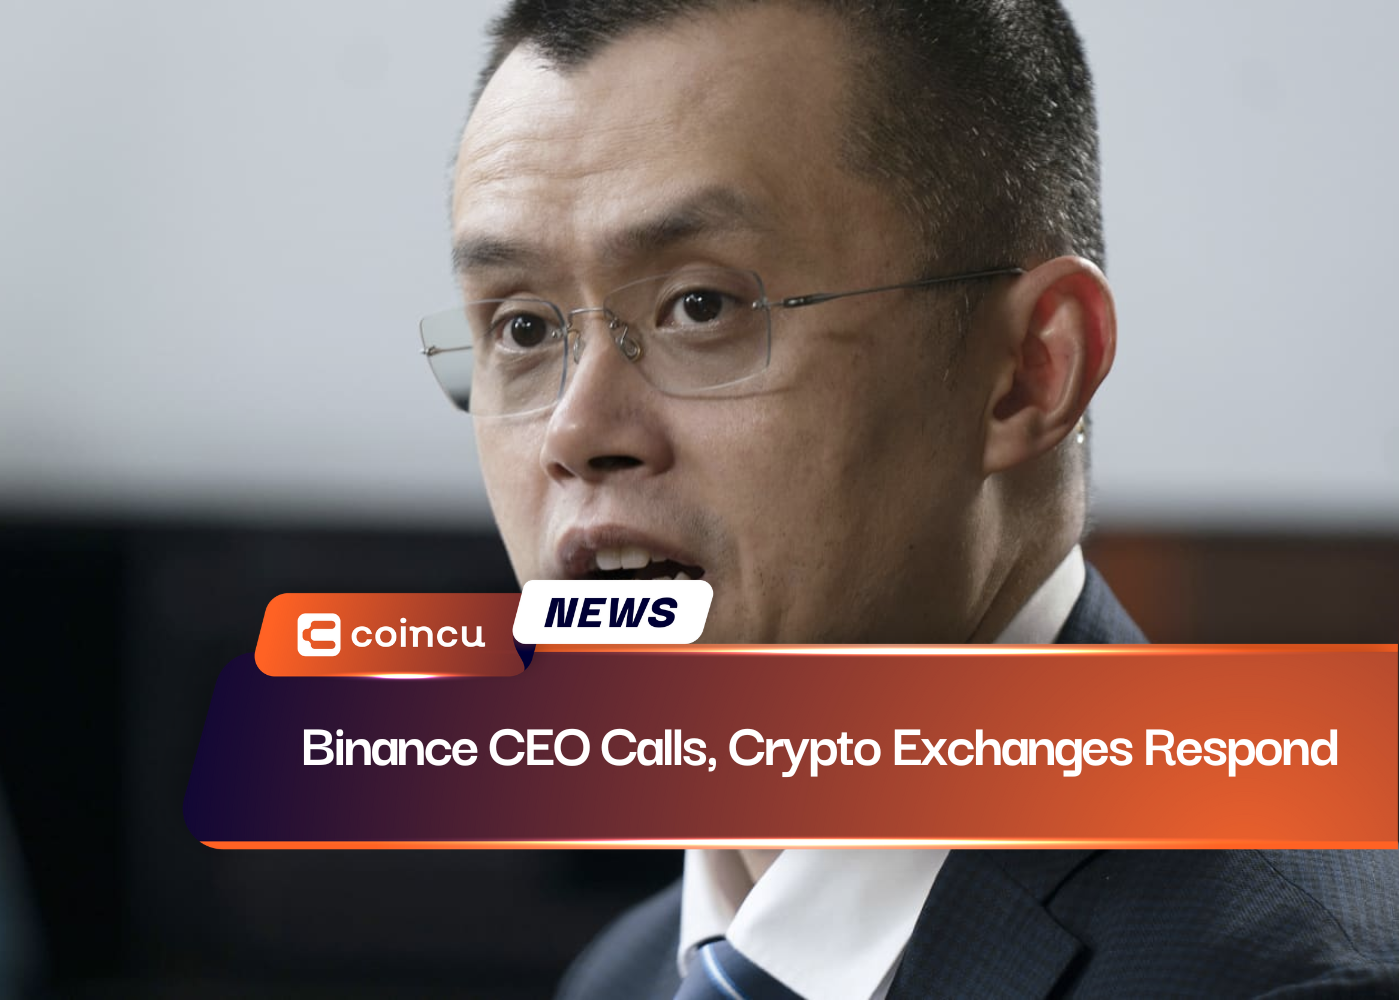 Binance CEO Calls, Crypto Exchanges Respond